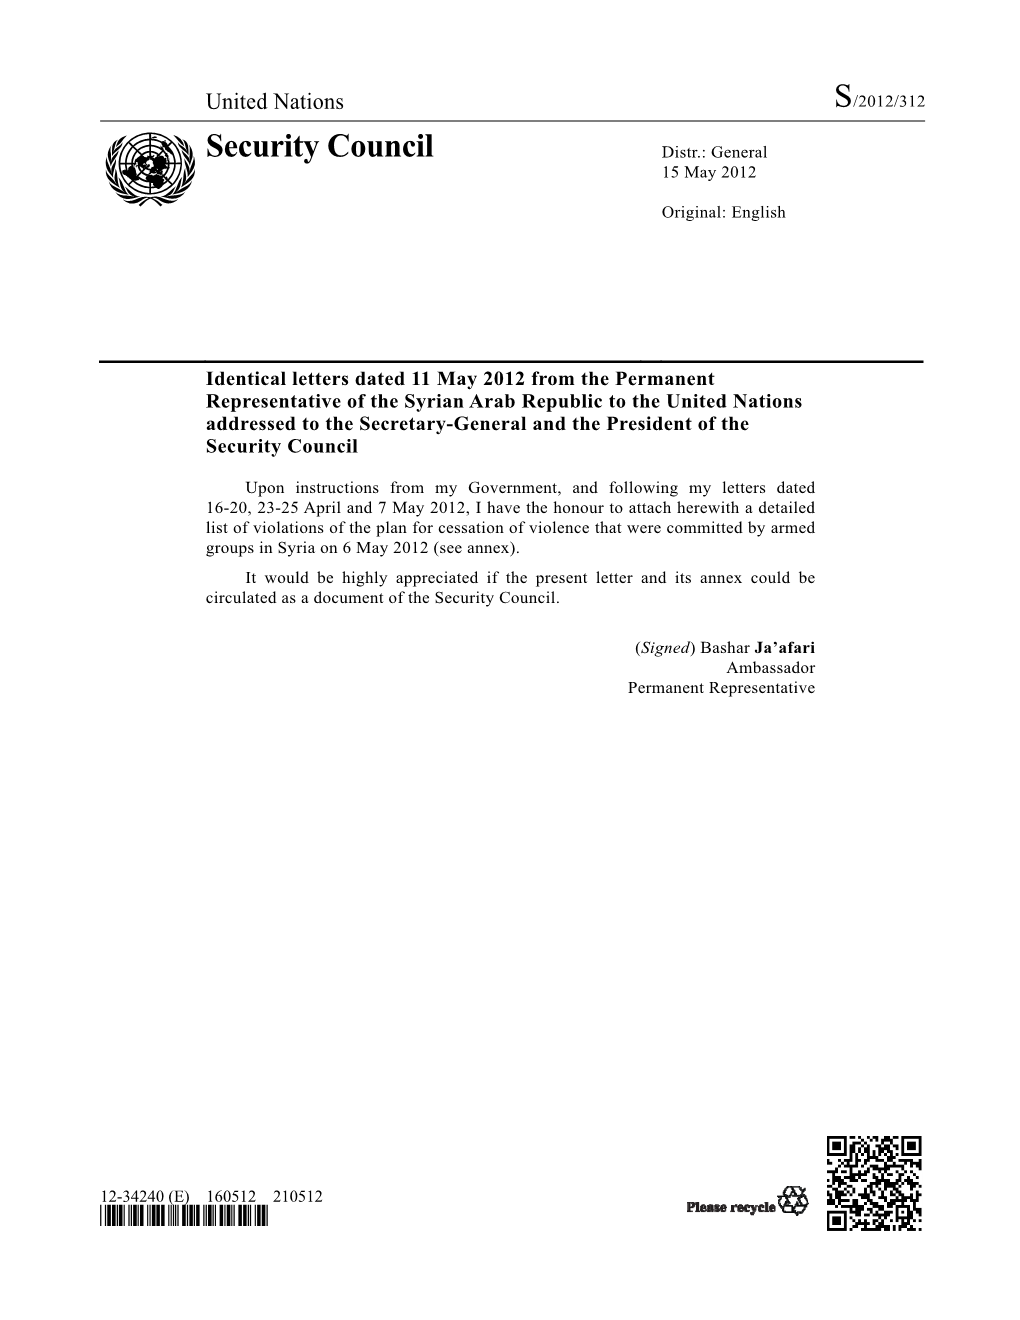 Security Council Distr.: General 15 May 2012